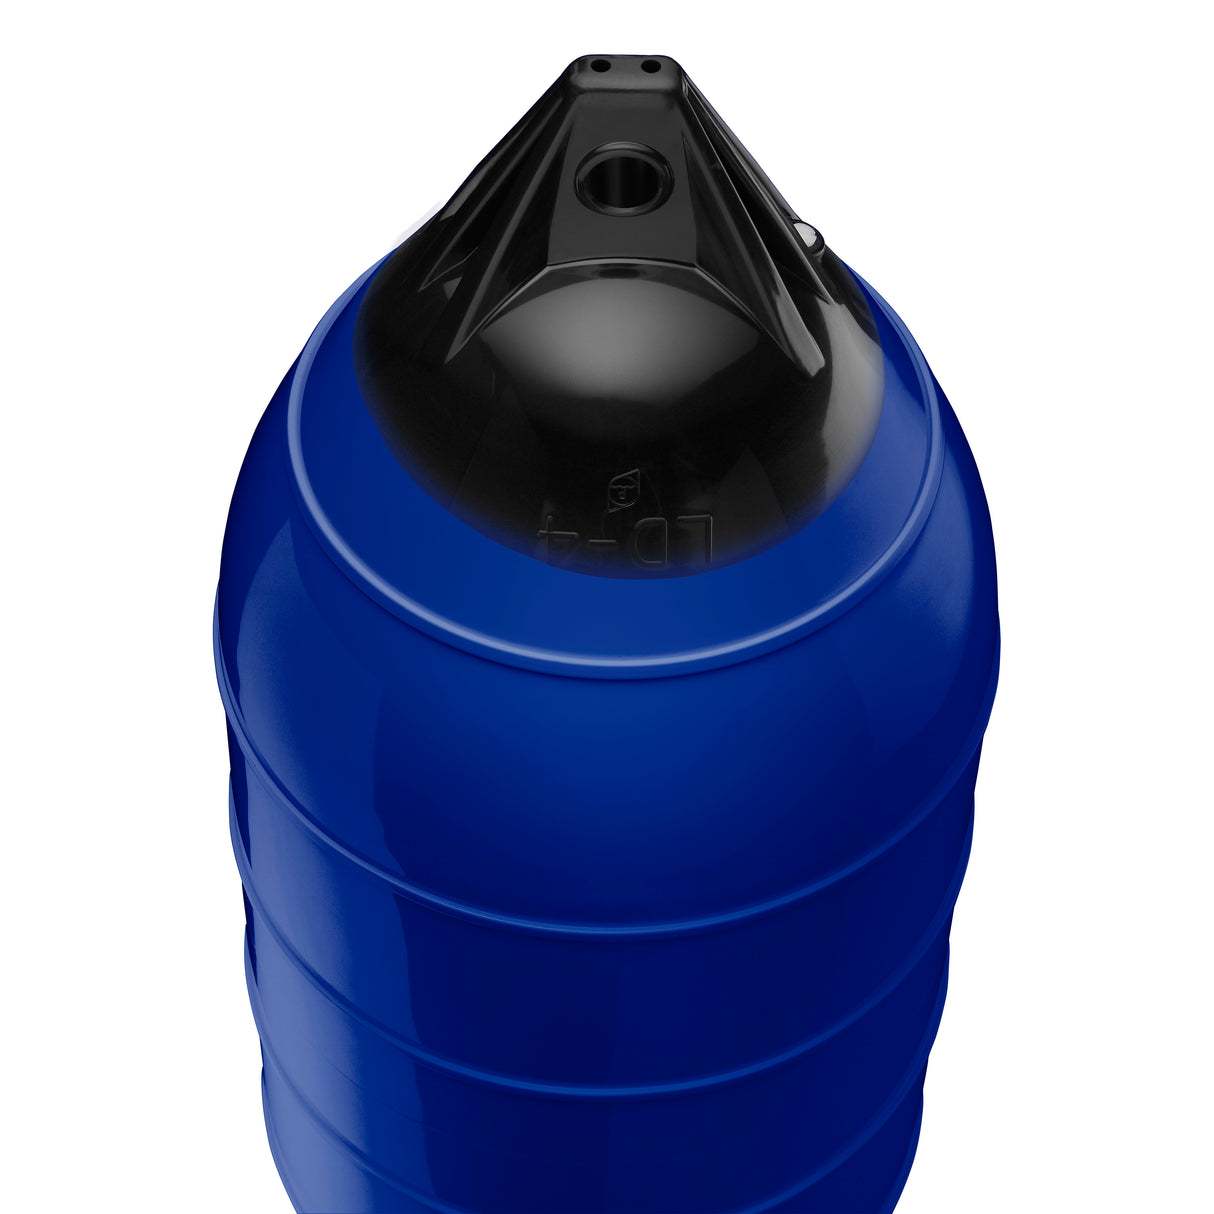 Cobalt Blue low drag buoy with Black-Top, Polyform LD-4 angled shot